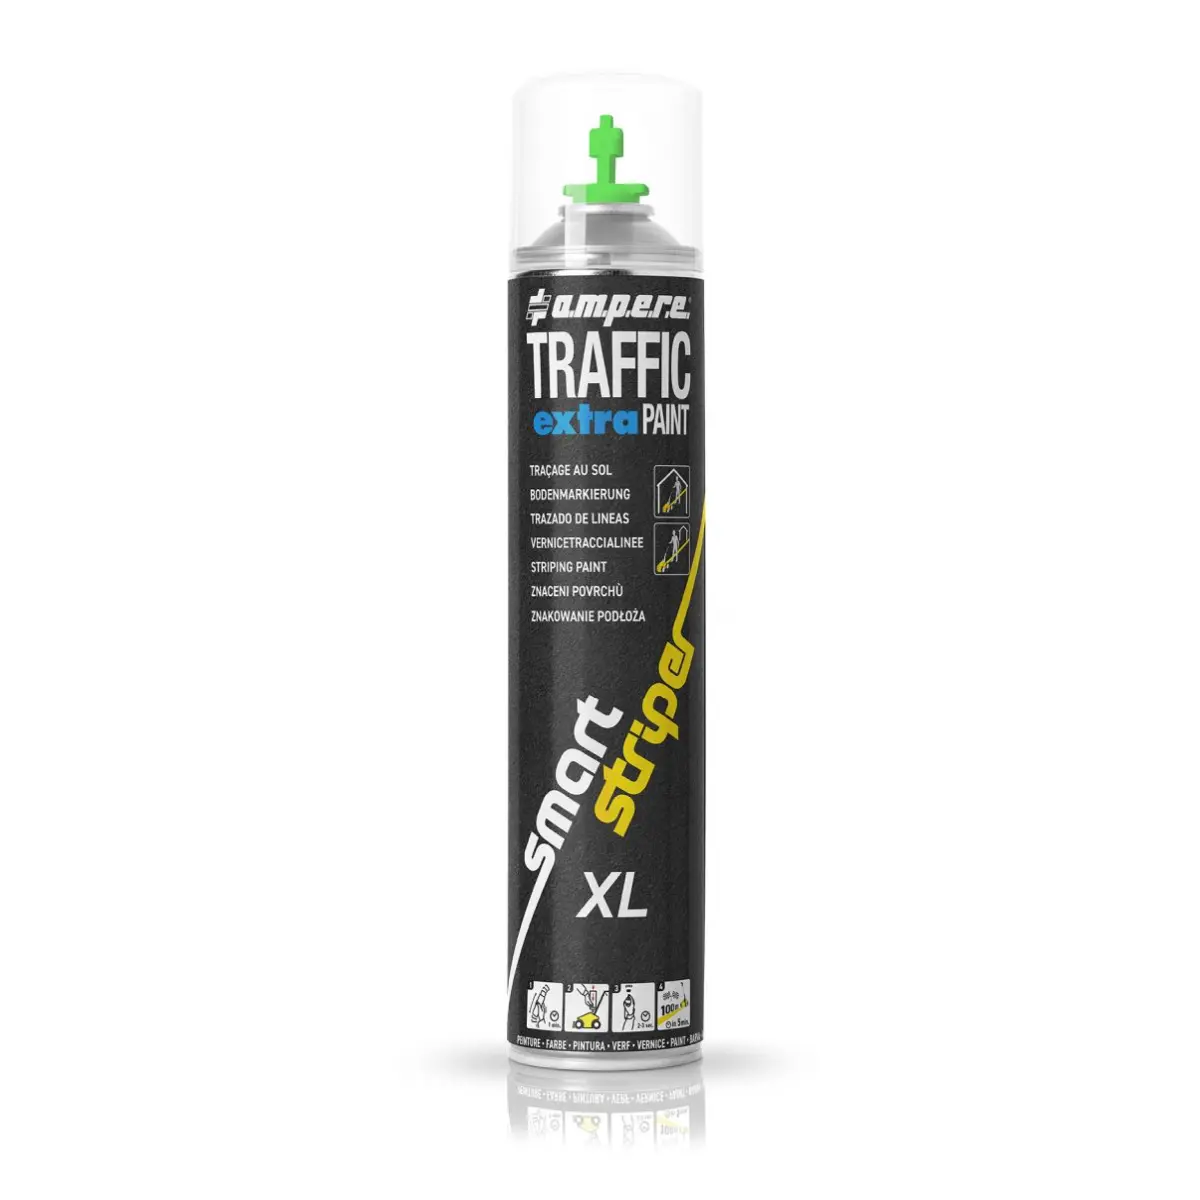 Bodenmarkierfarbe Traffic Extra Paint XL, 750 ml netto grün 6 Dosen